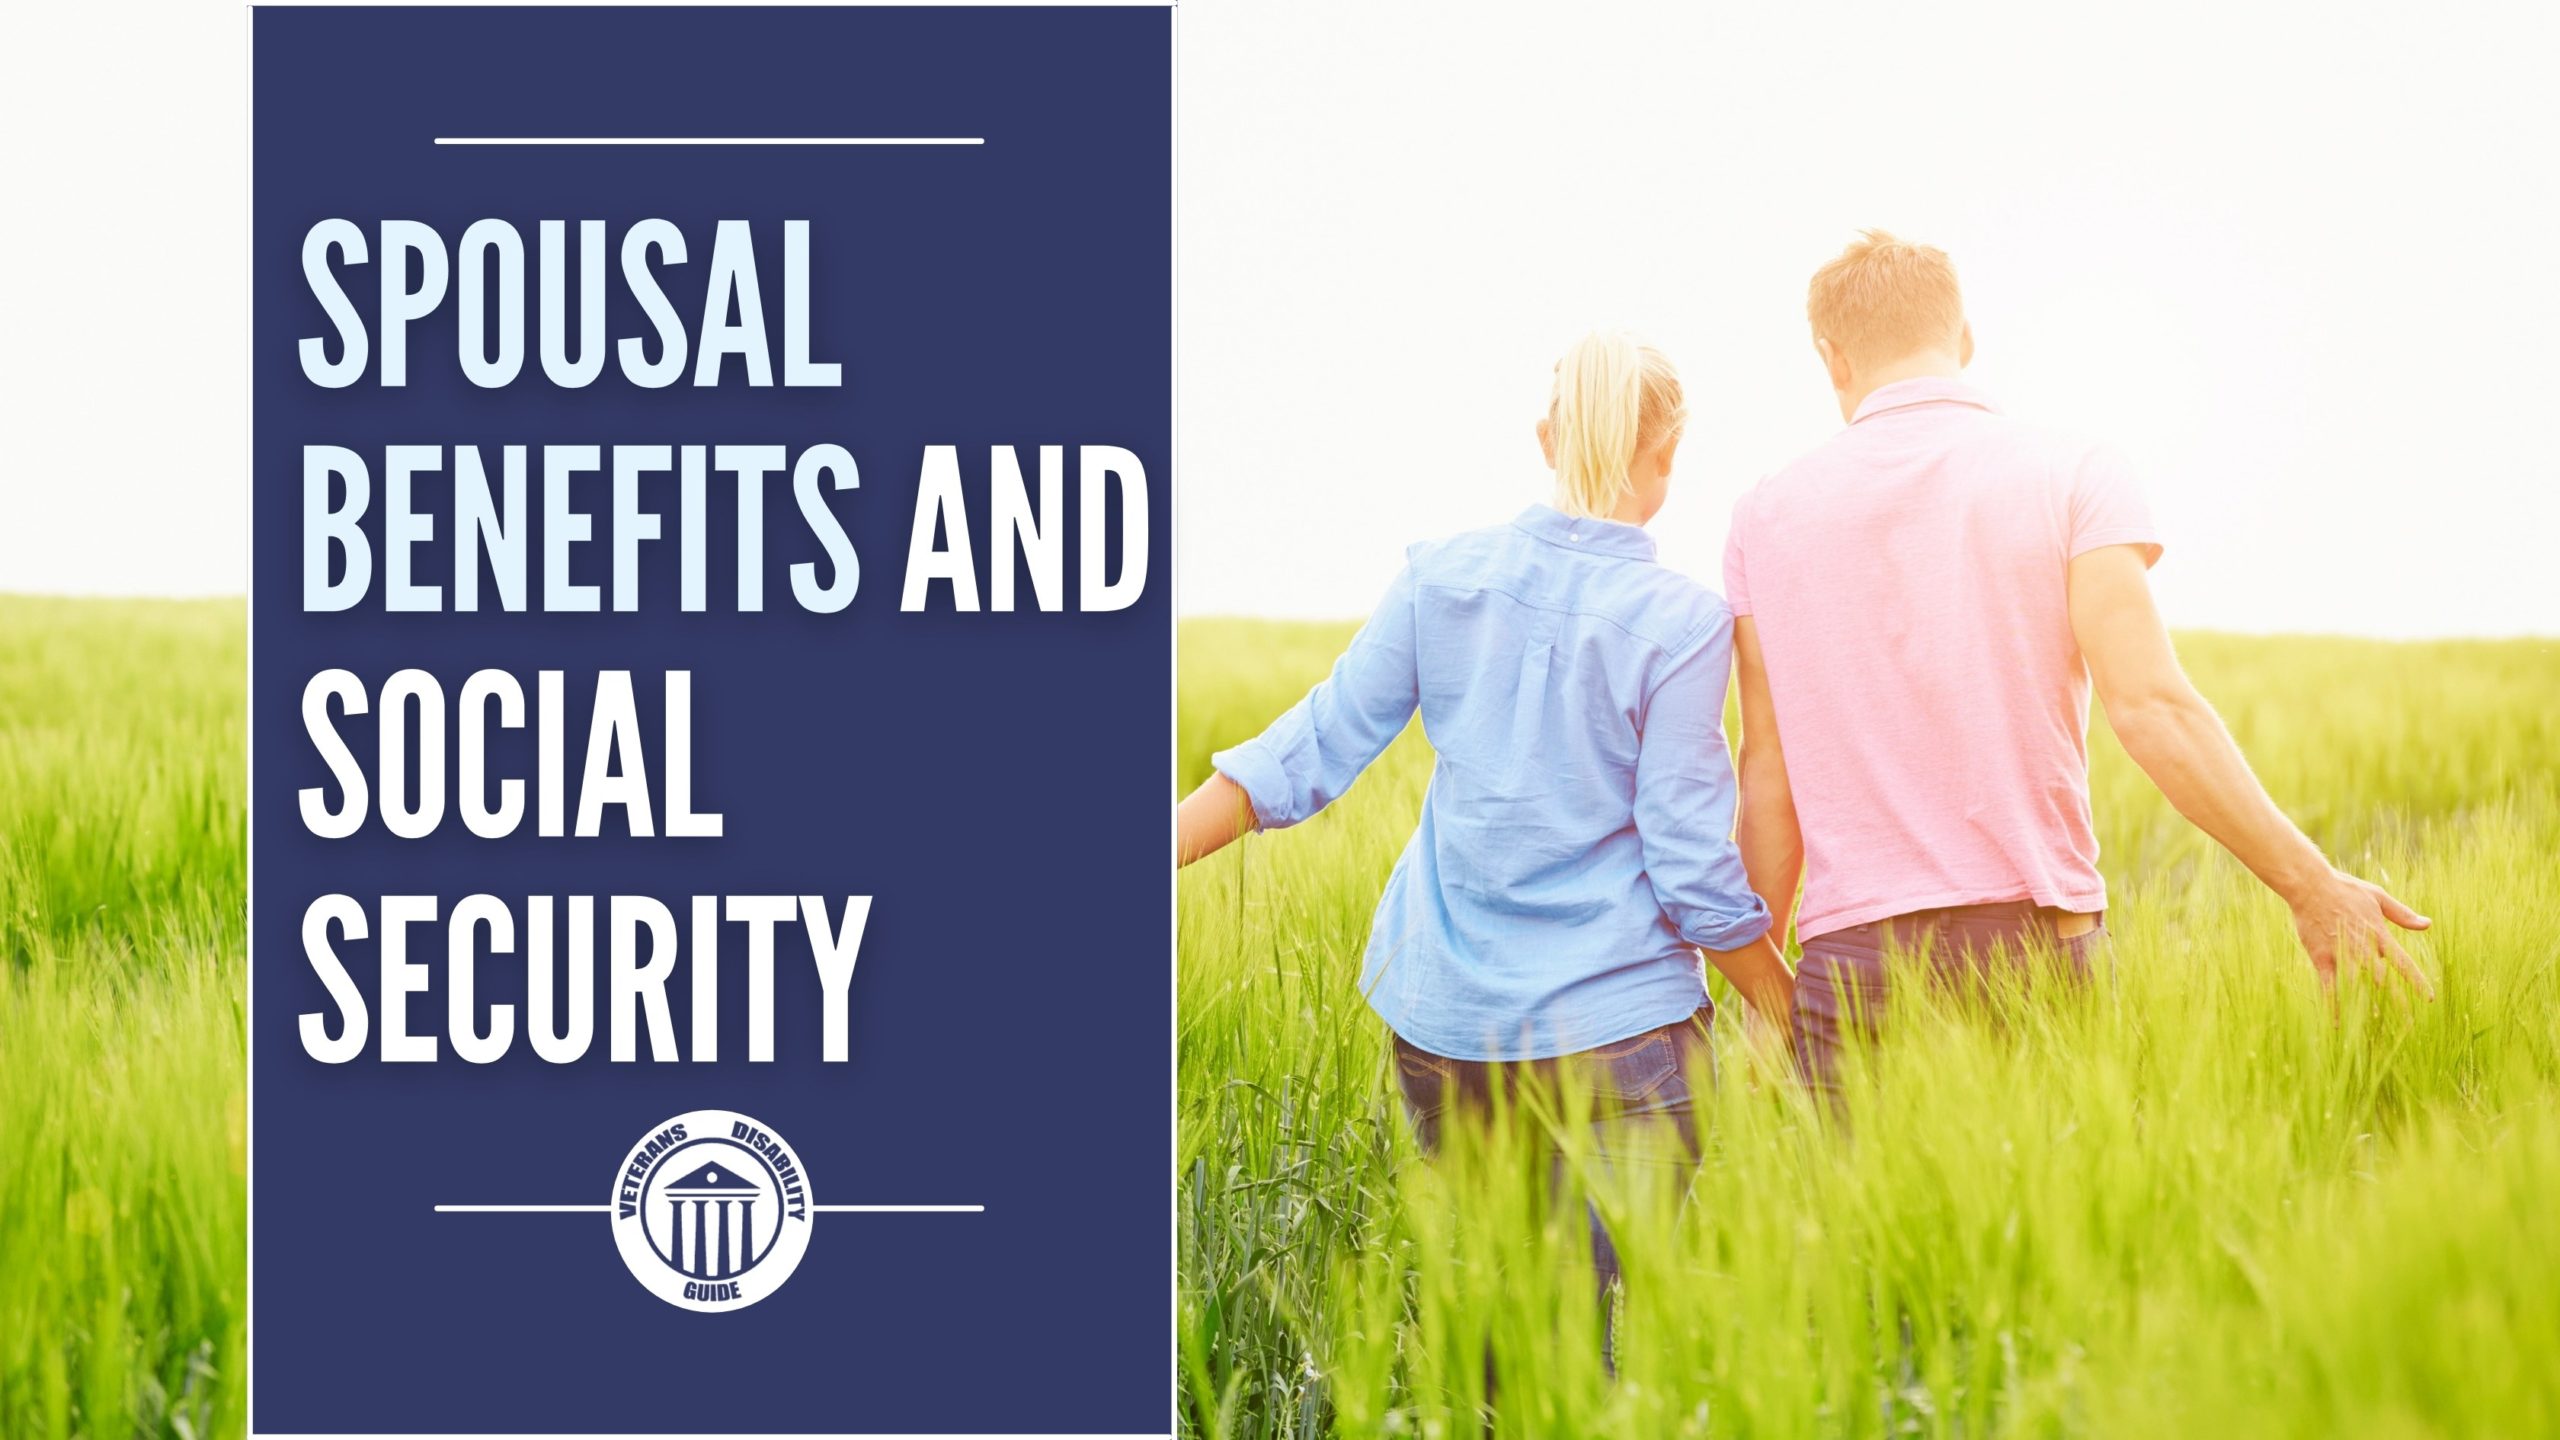 Spousal Benefits and Social Security blog header image